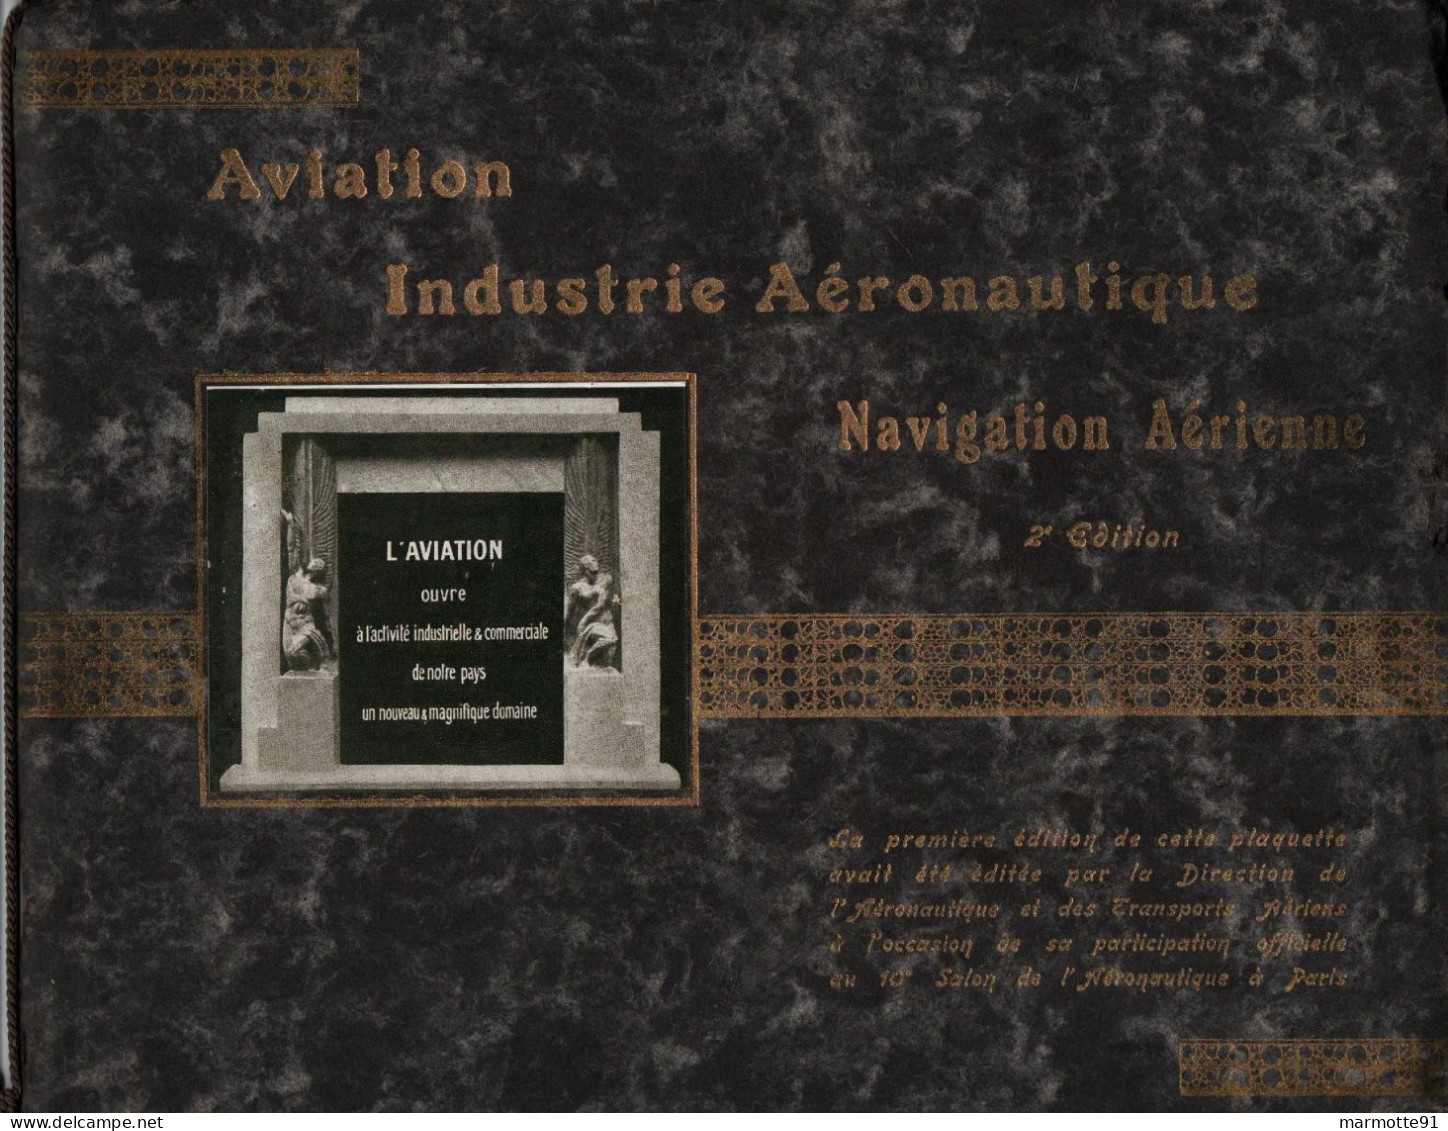 AVIATION INDUSTRIE AERONAUTIQUE NAVIGATION AERIENNE 2e EDITION  10e SALON AERONAUTIQUE PARIS - Avión